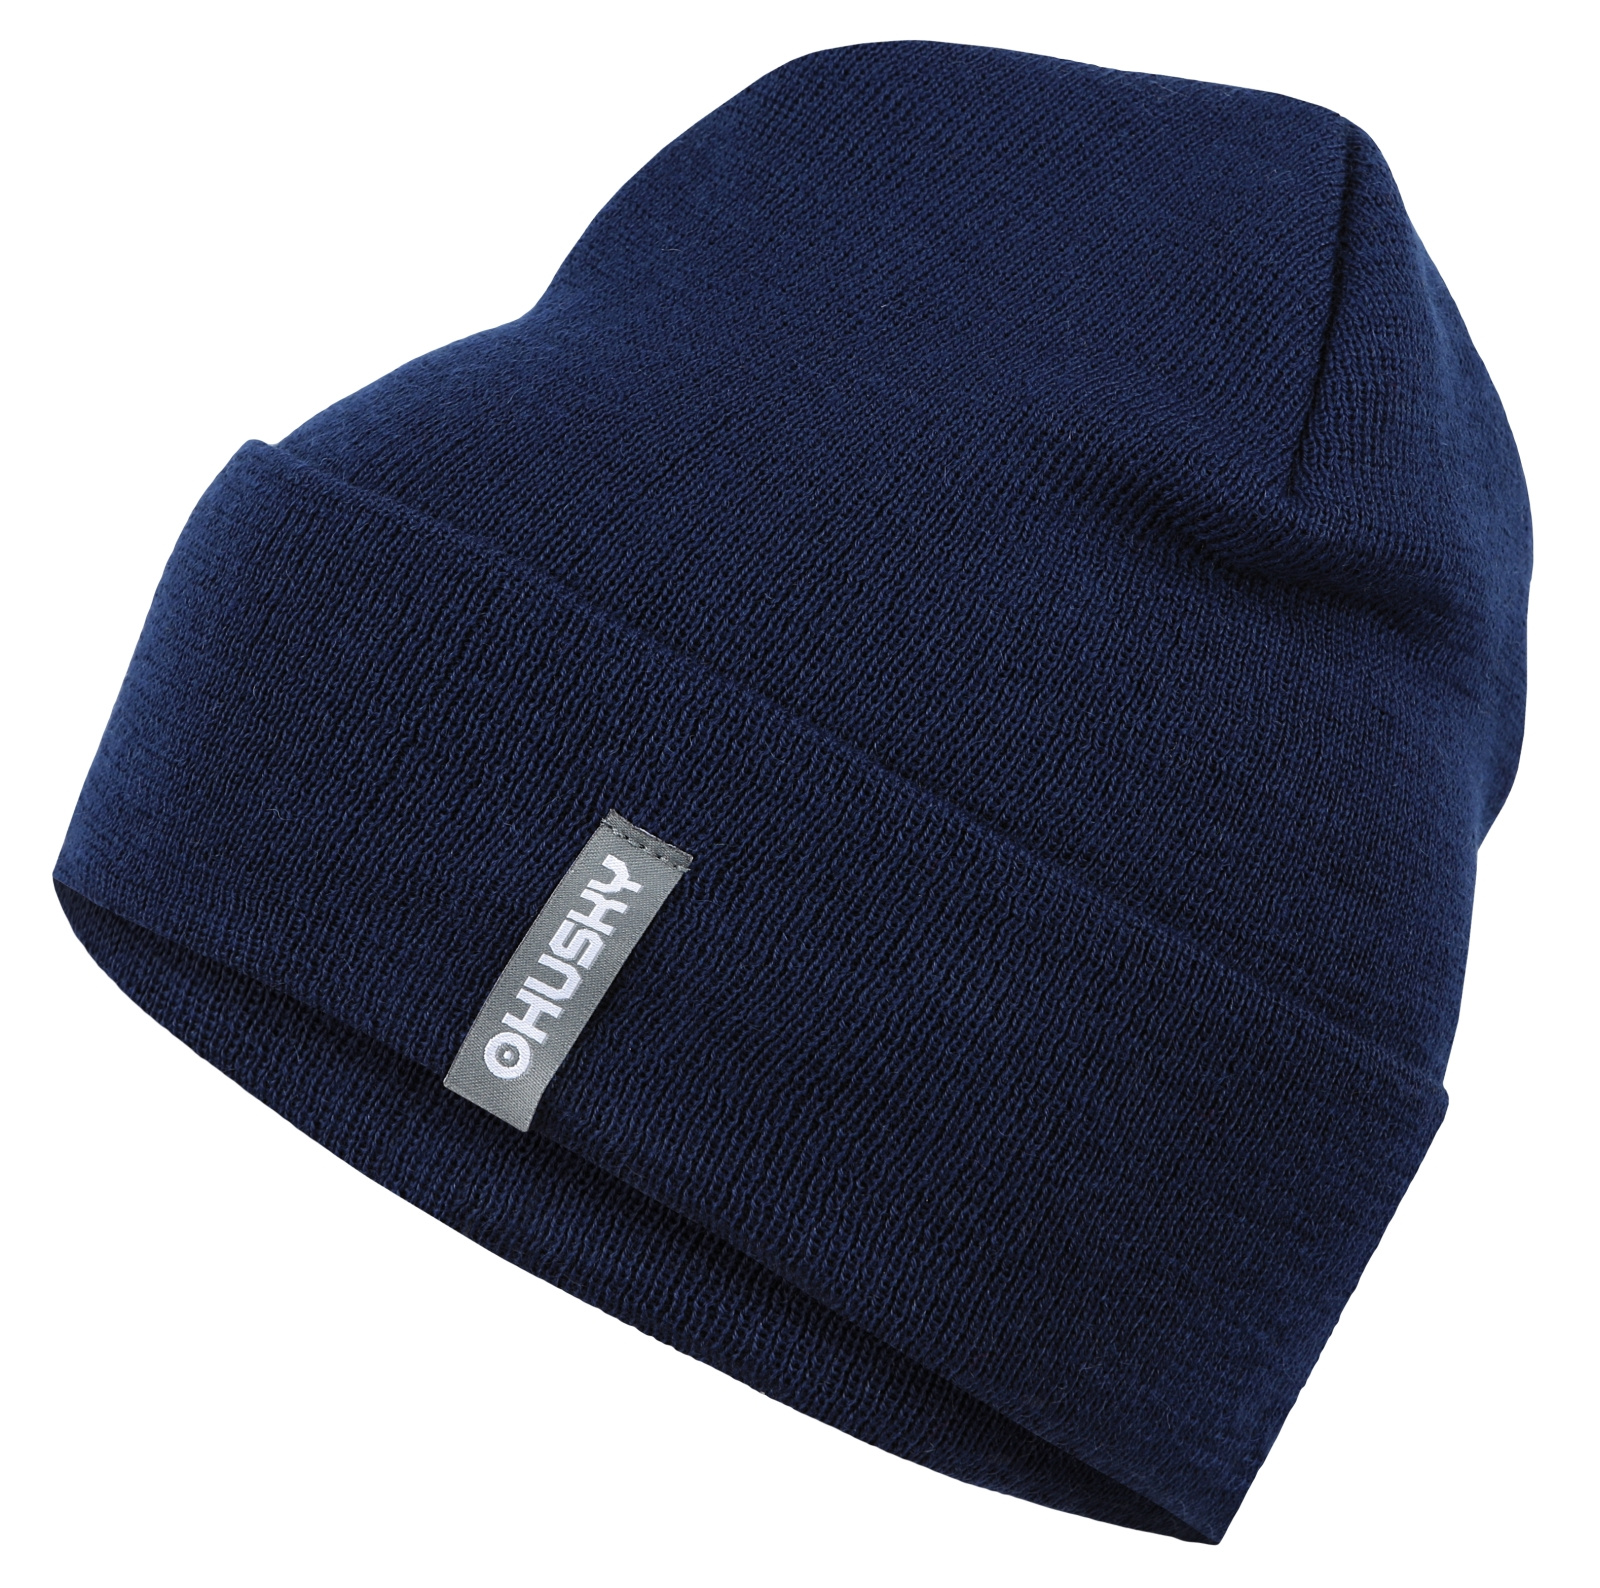 Men's merino hat HUSKY Merhat 1 blue